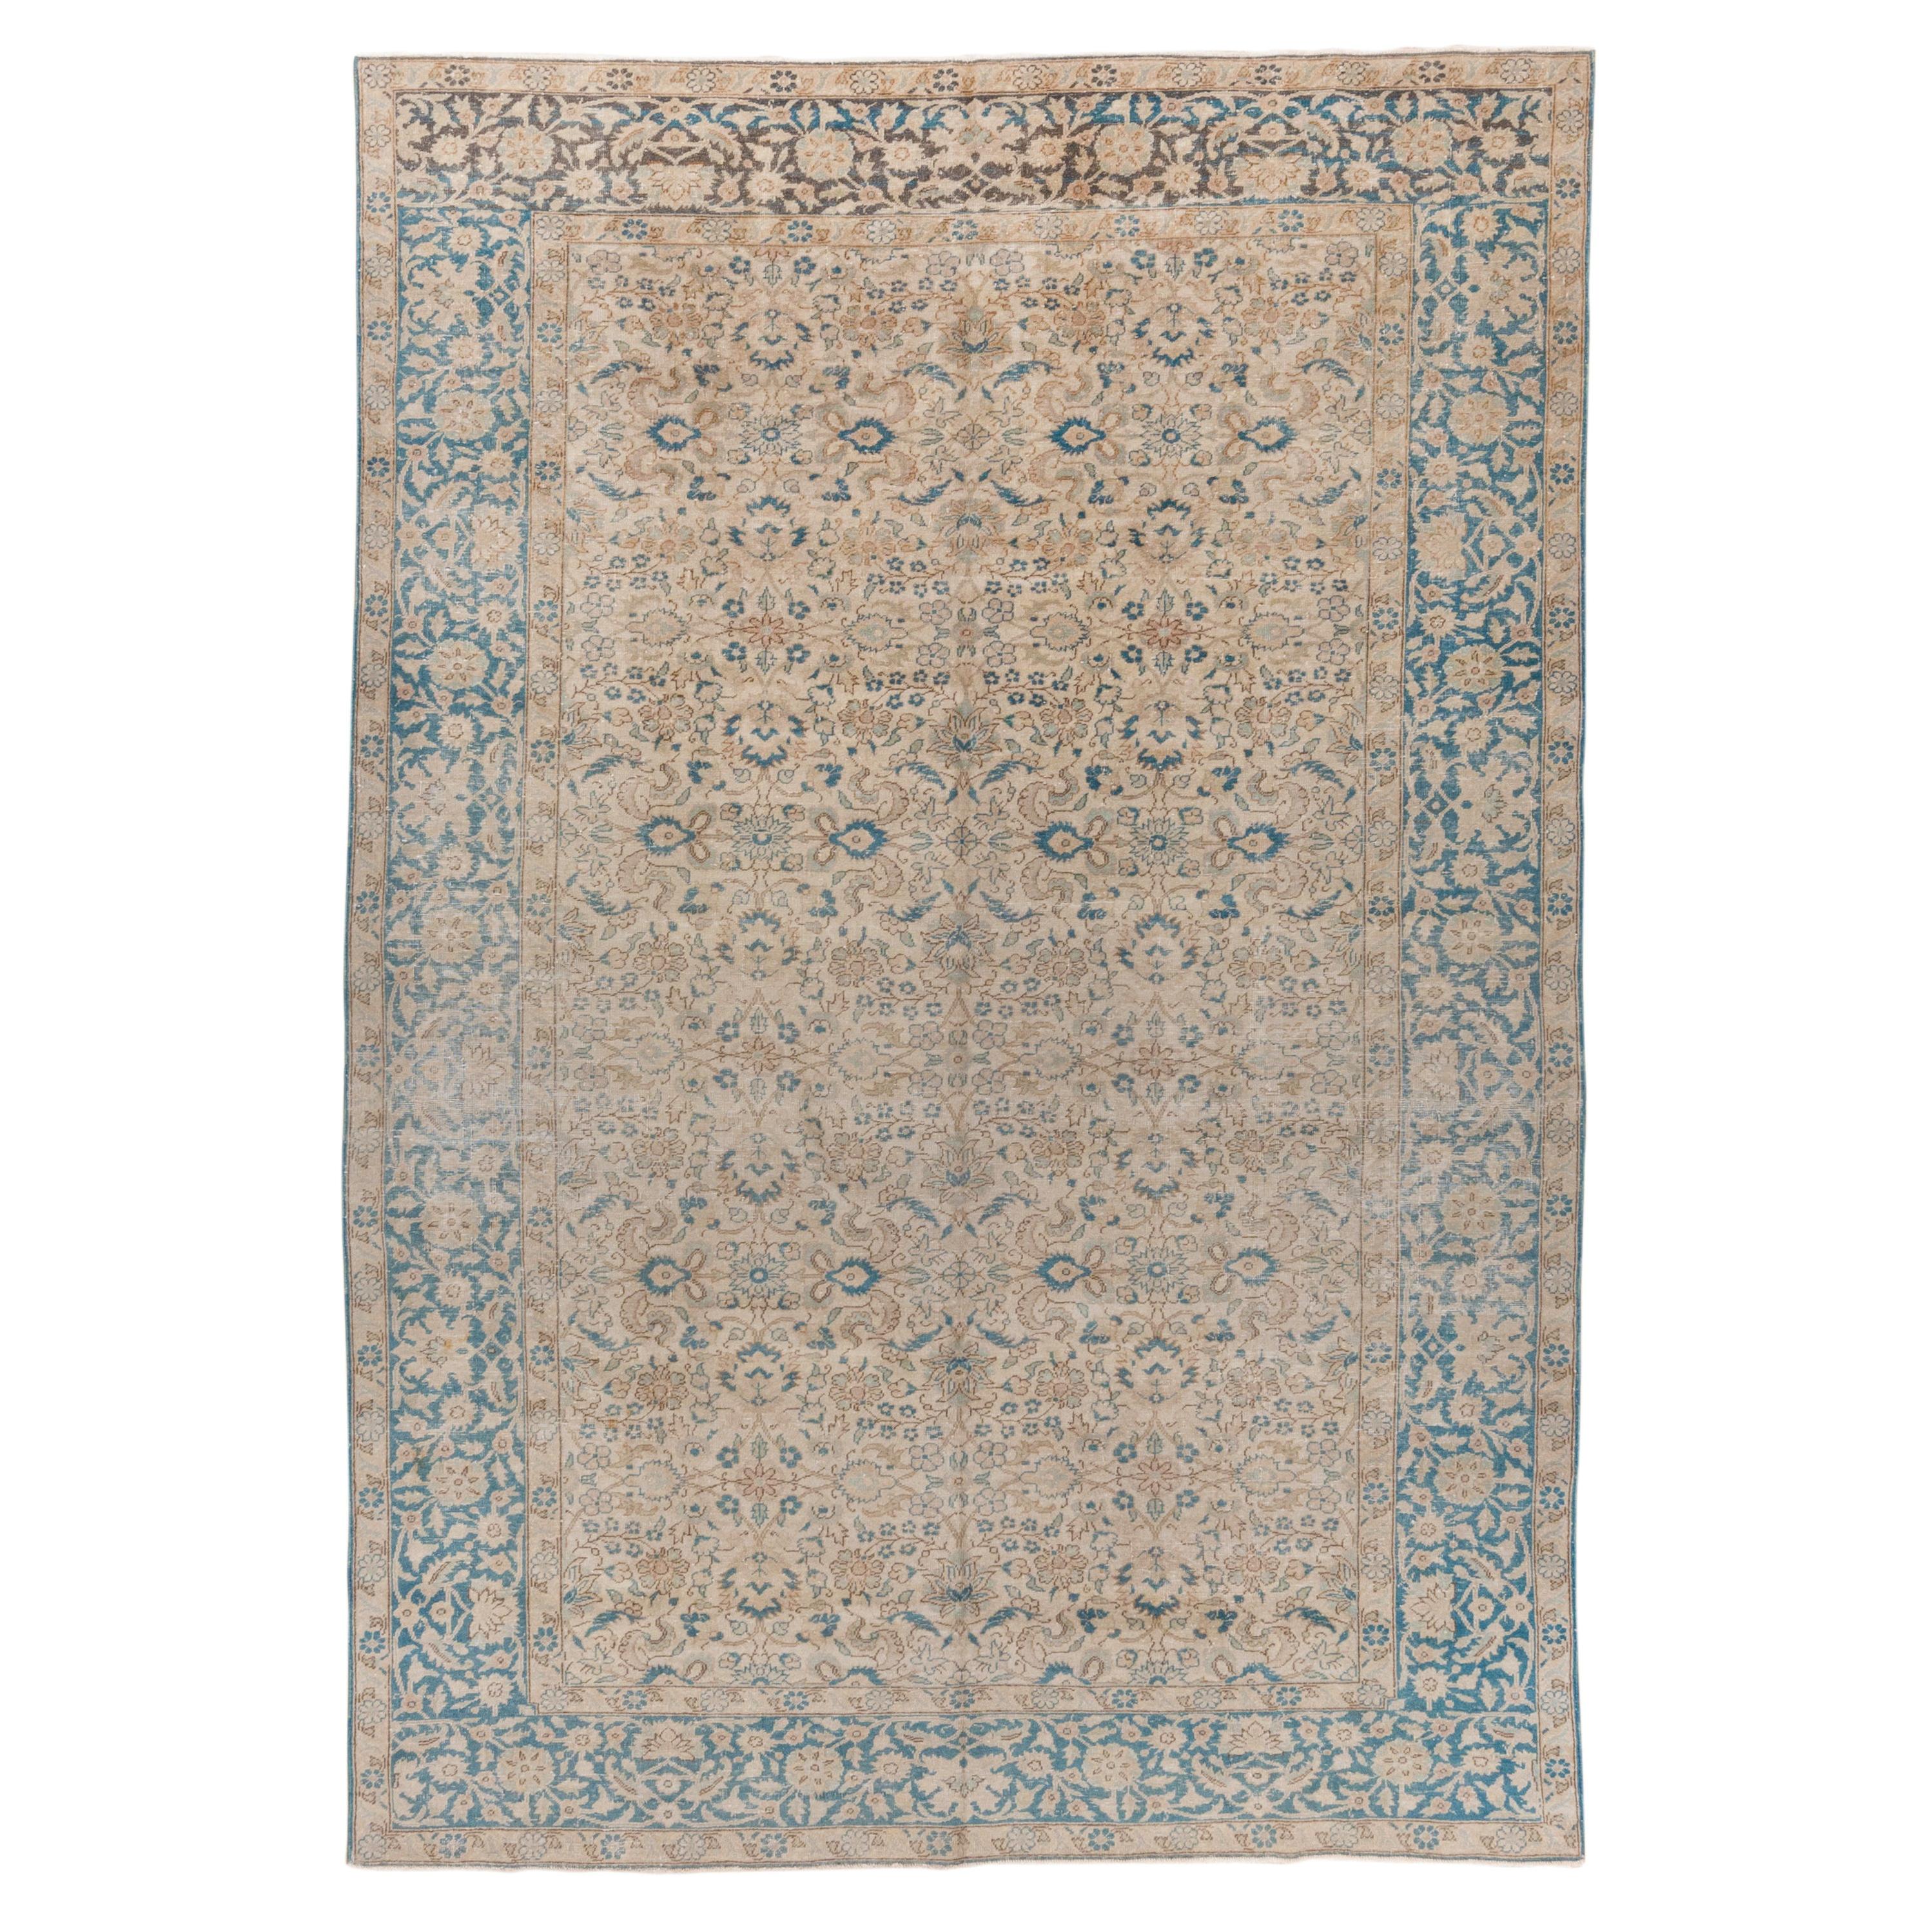 Turkish Sivas Carpet, Light Brown Field Field & Blue Borders For Sale